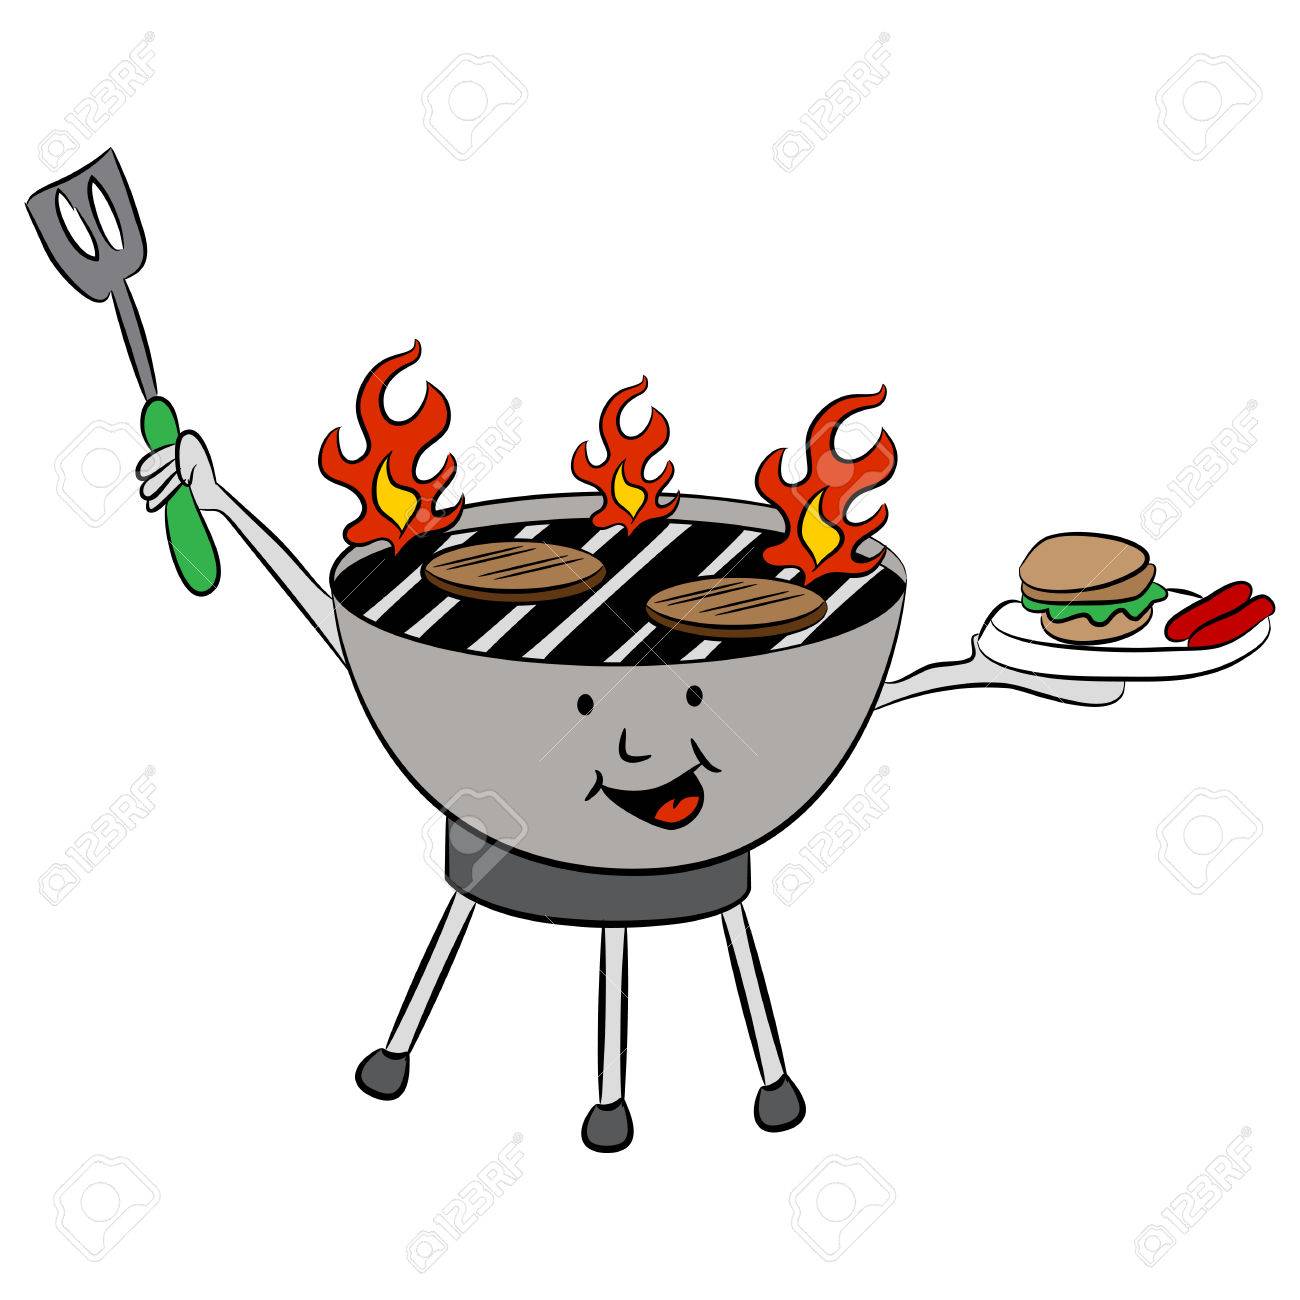 Barbecue grill clipart.